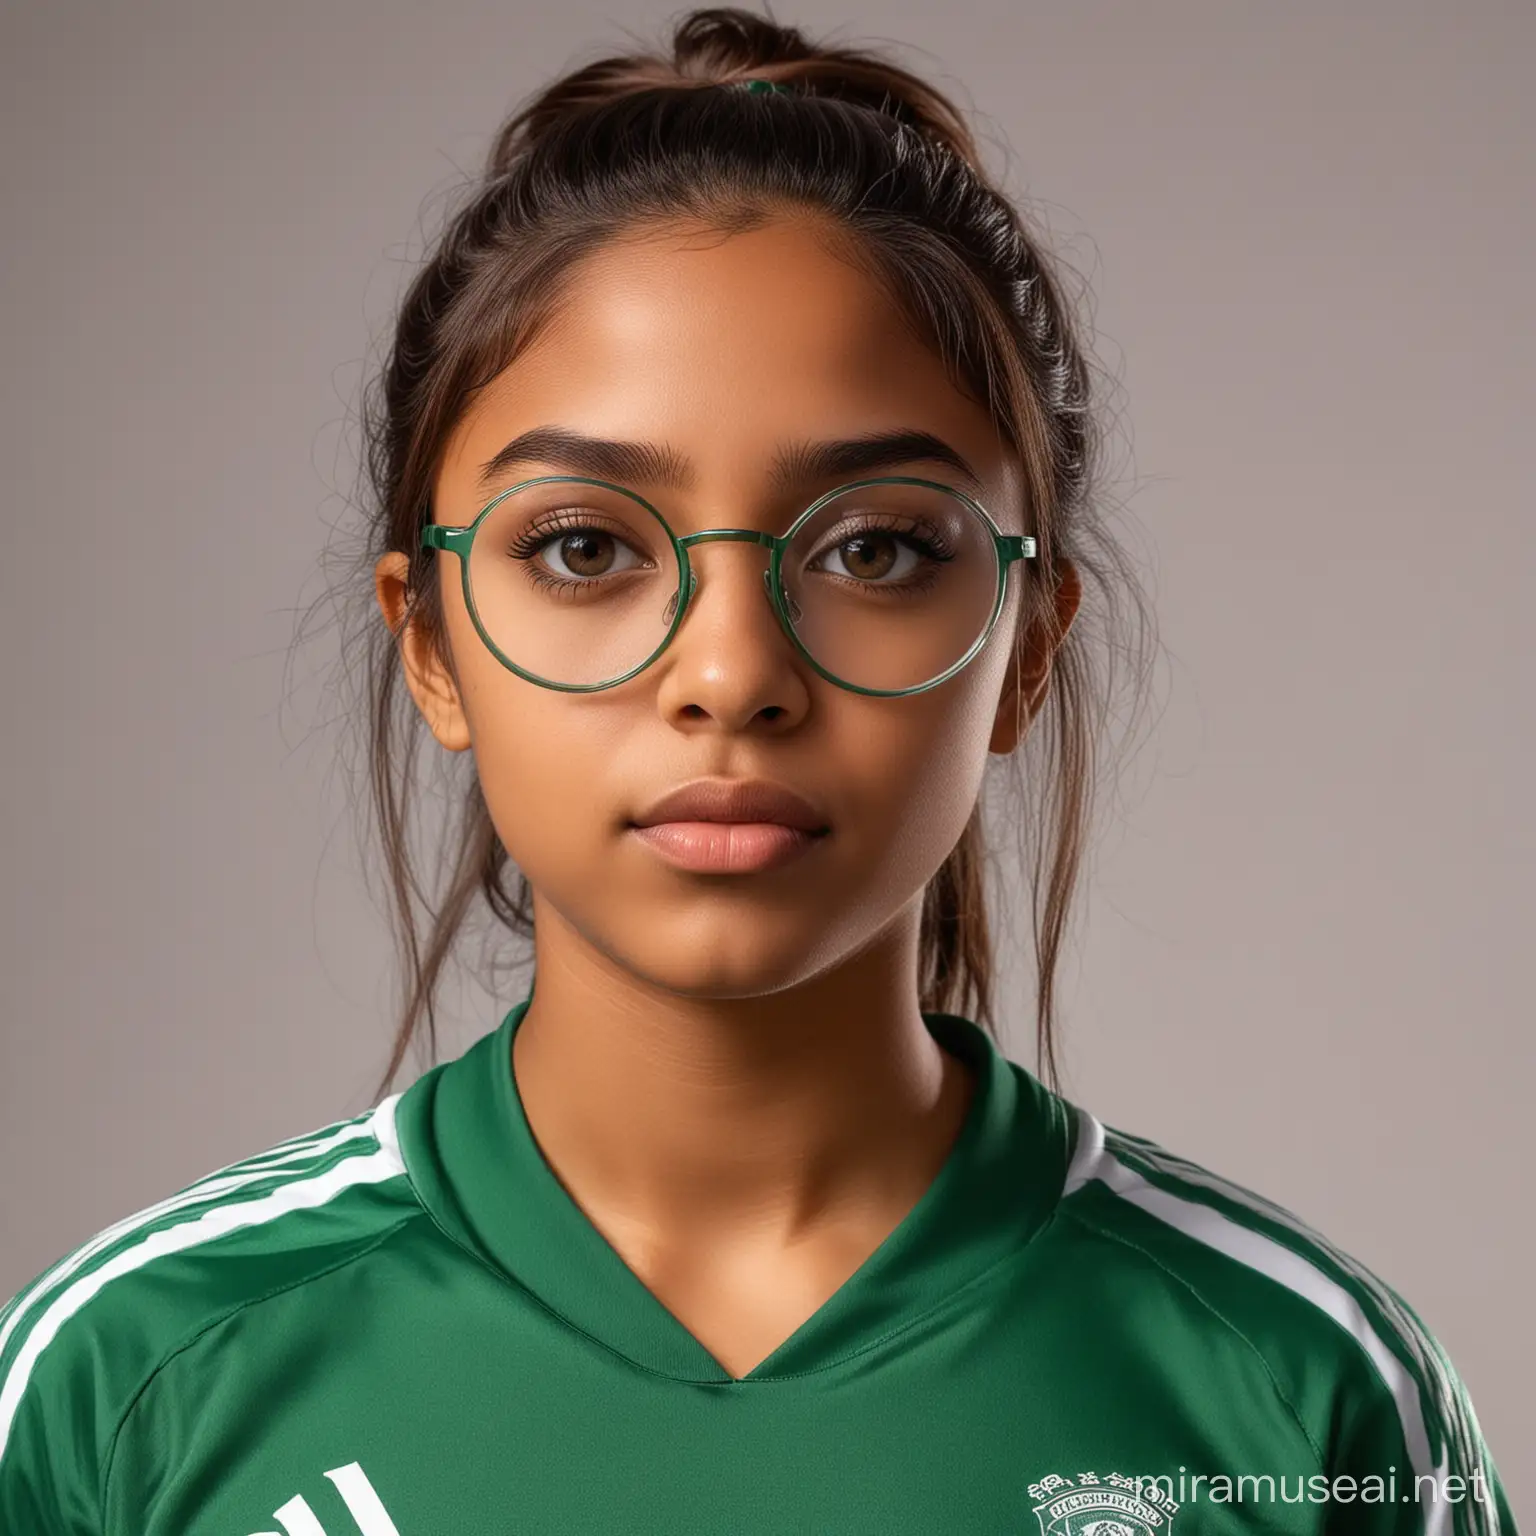 Strong BrownSkinned Girl in Soccer Gear with Green Glasses